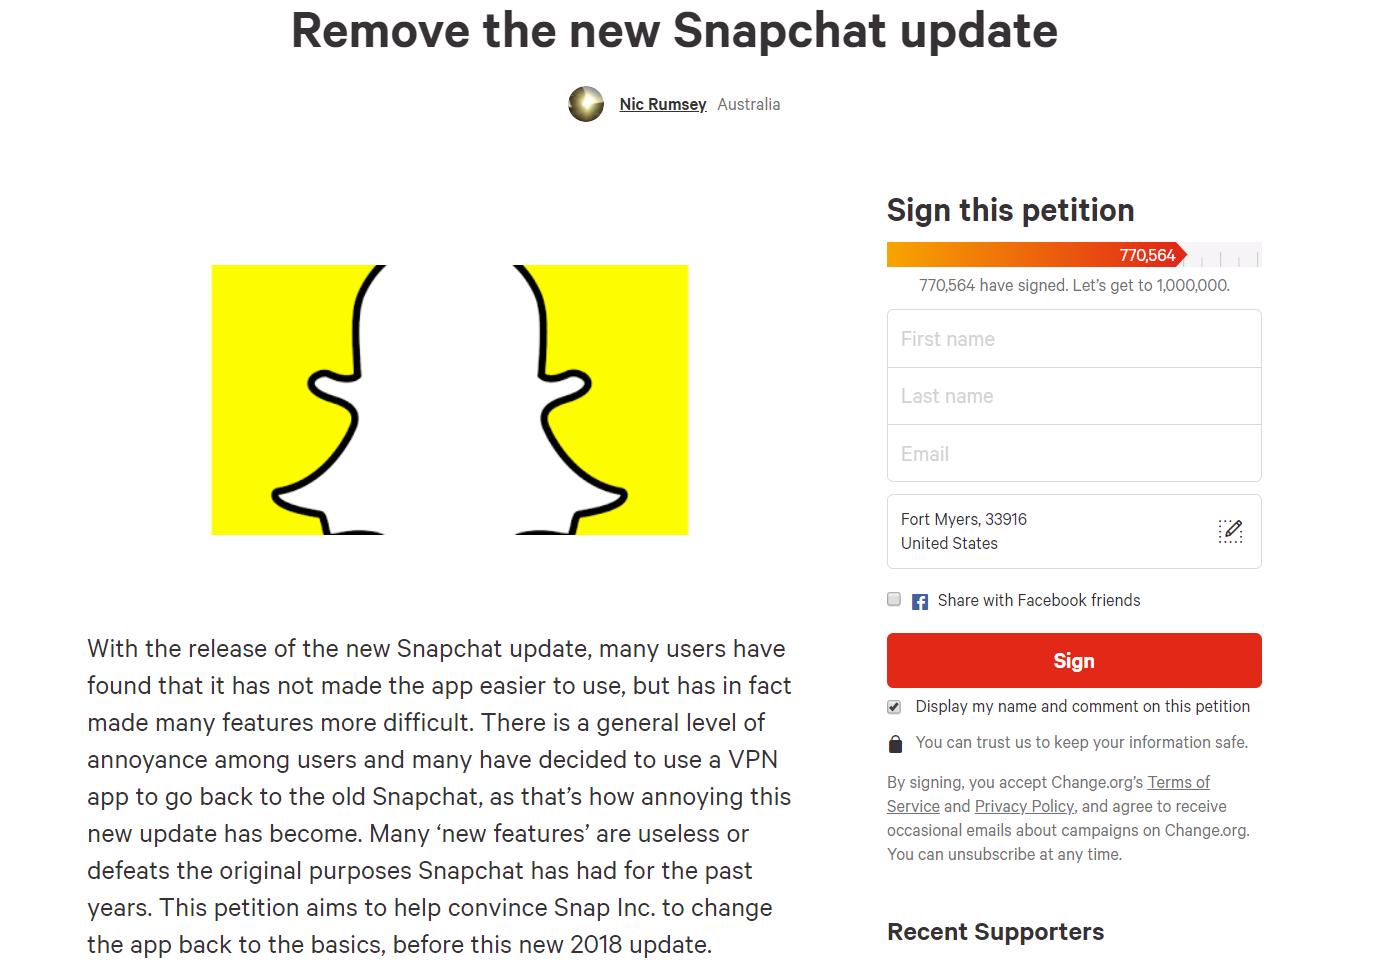 Snapchat-oppdateringen har utløst en stor underskriftskampanje, som i skrivende stund har 770 000 underskrifter.